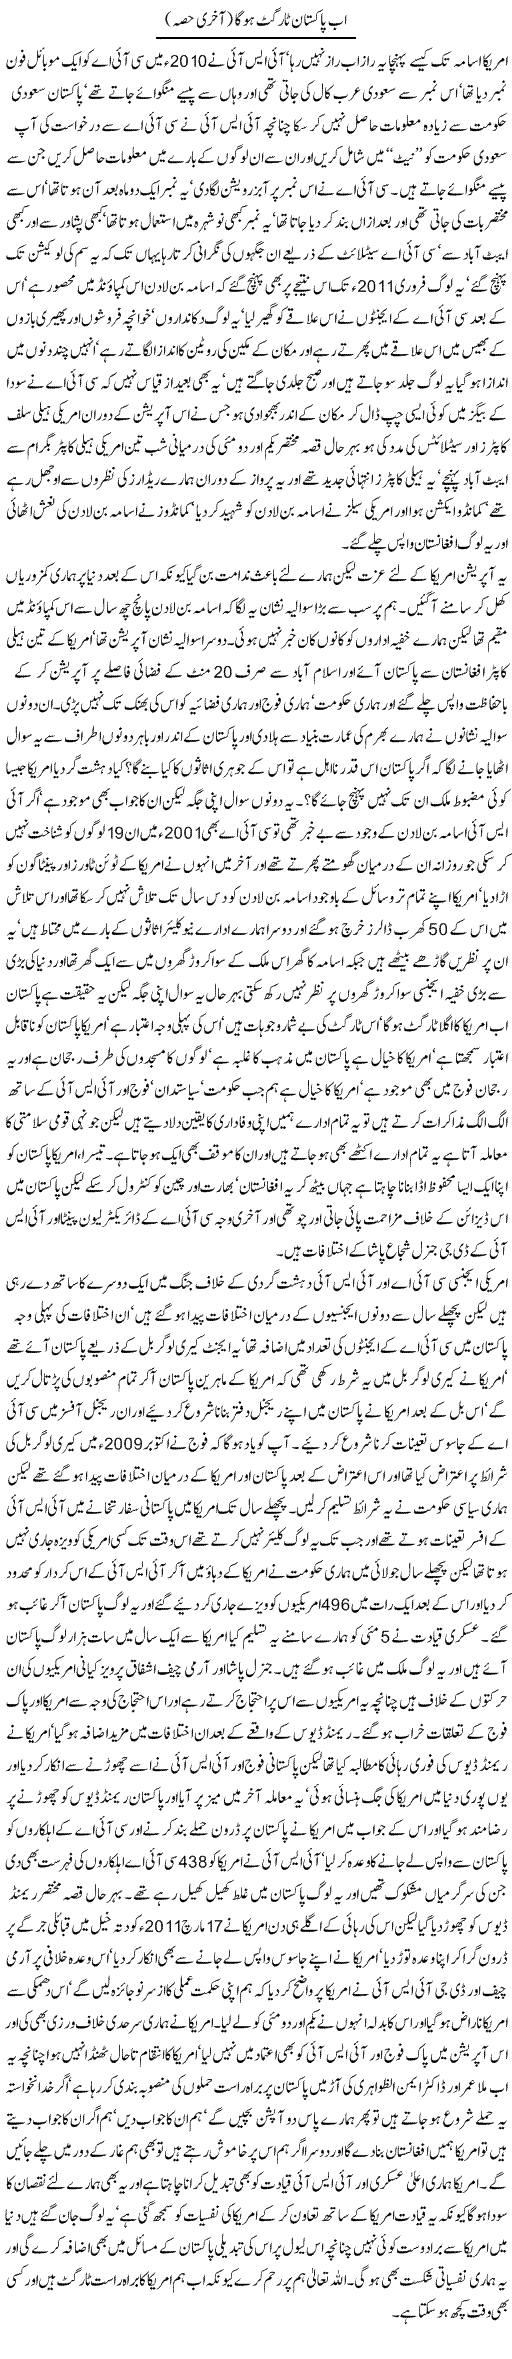 Ab Pakistan target ho ga (Part 4) - Javed Chaudhry